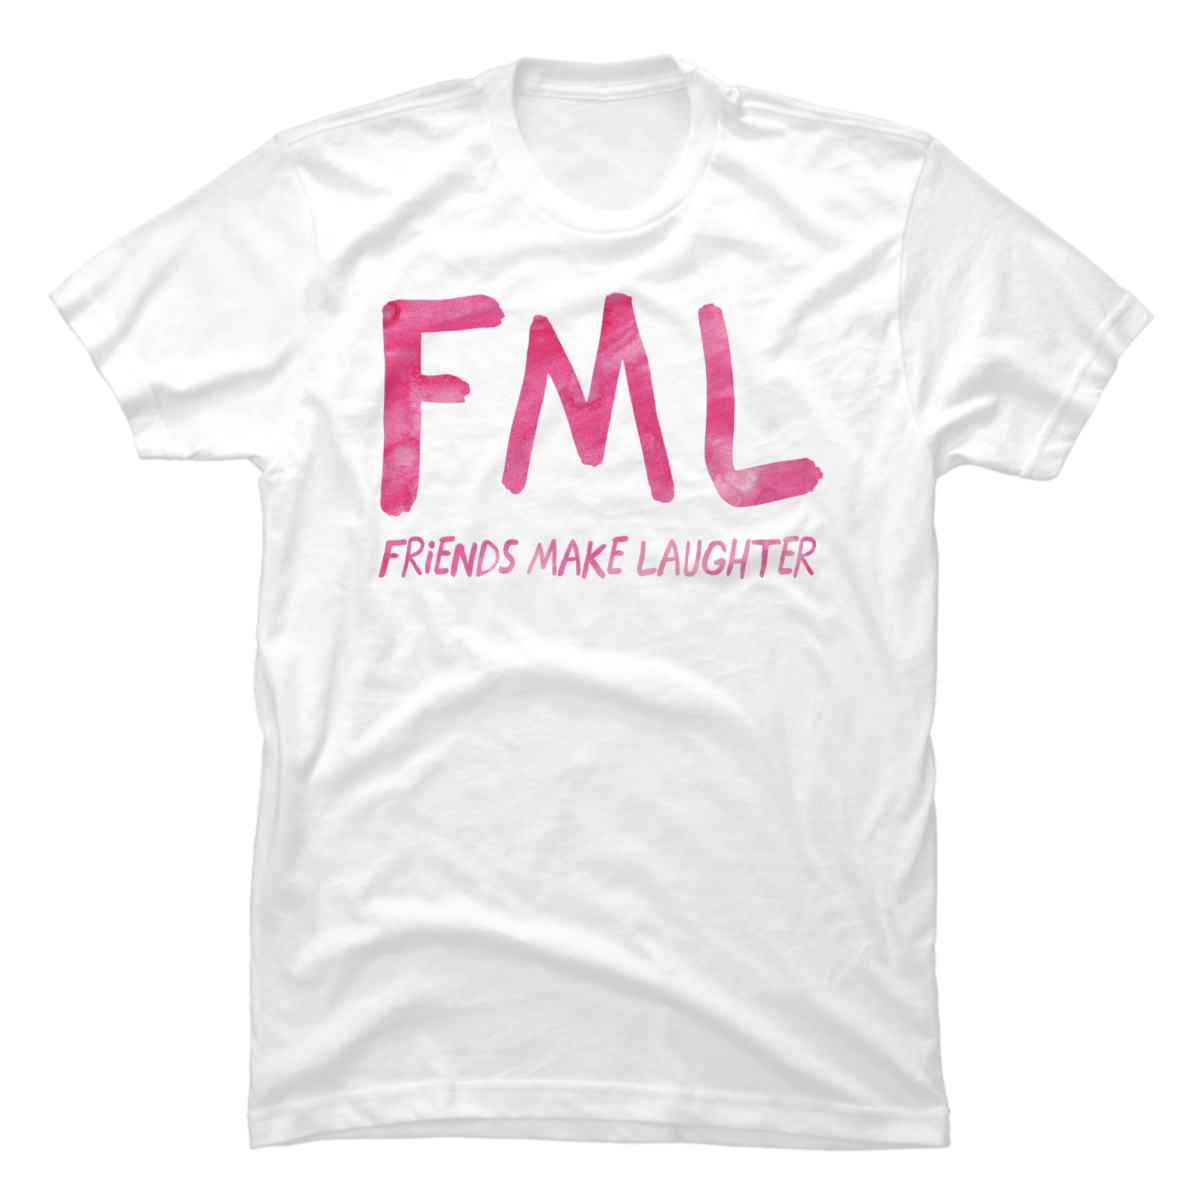 fml shirts